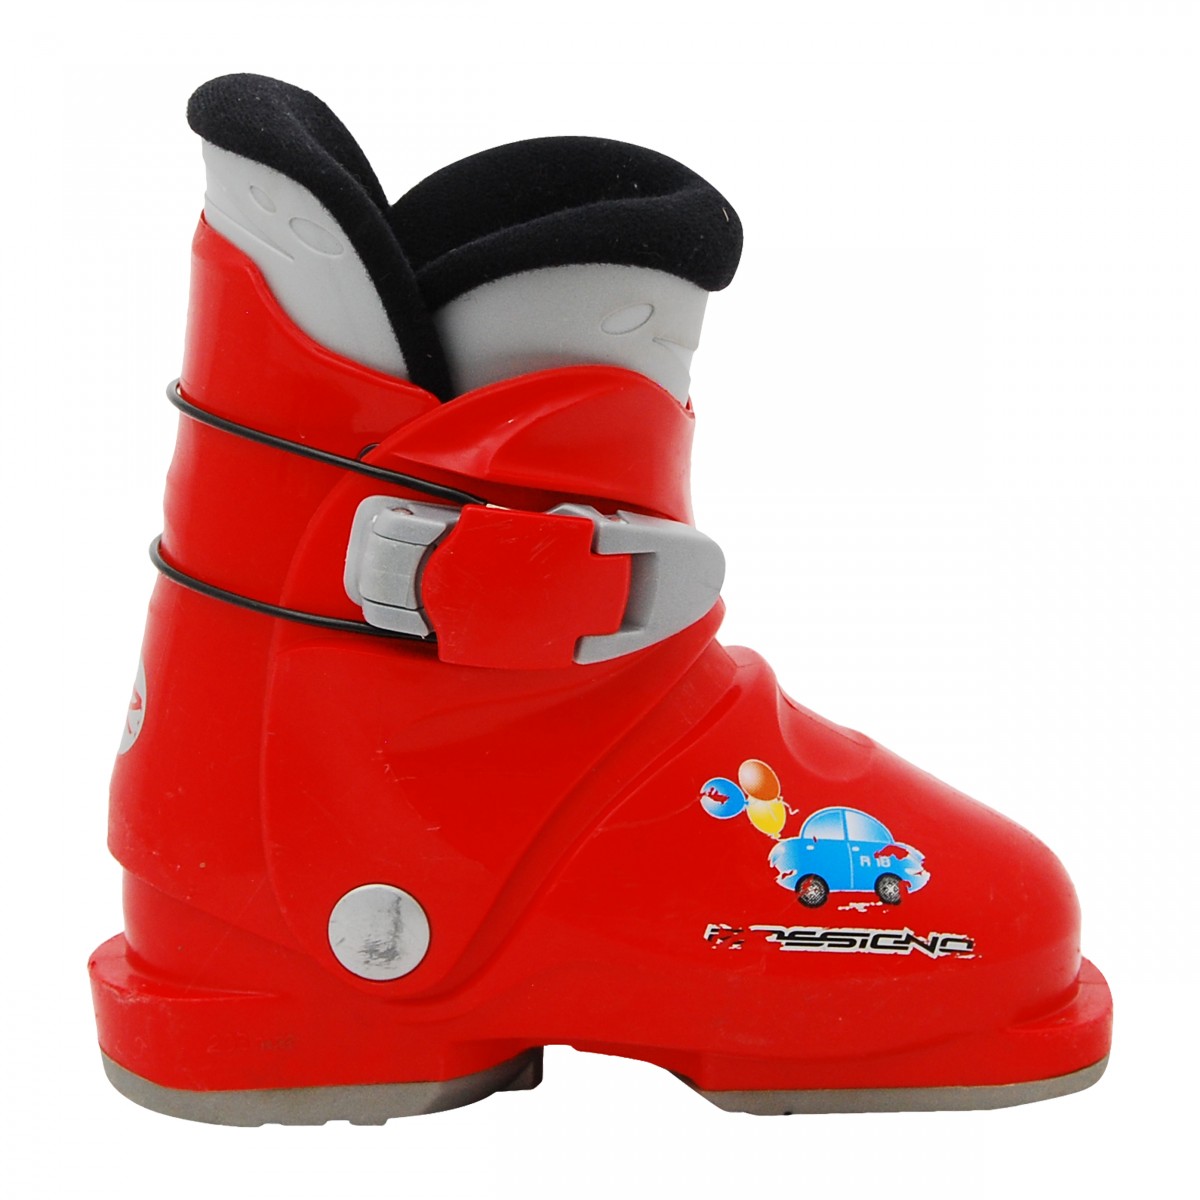 Pack ski enfant d'occasion : ski alpin + chaussures